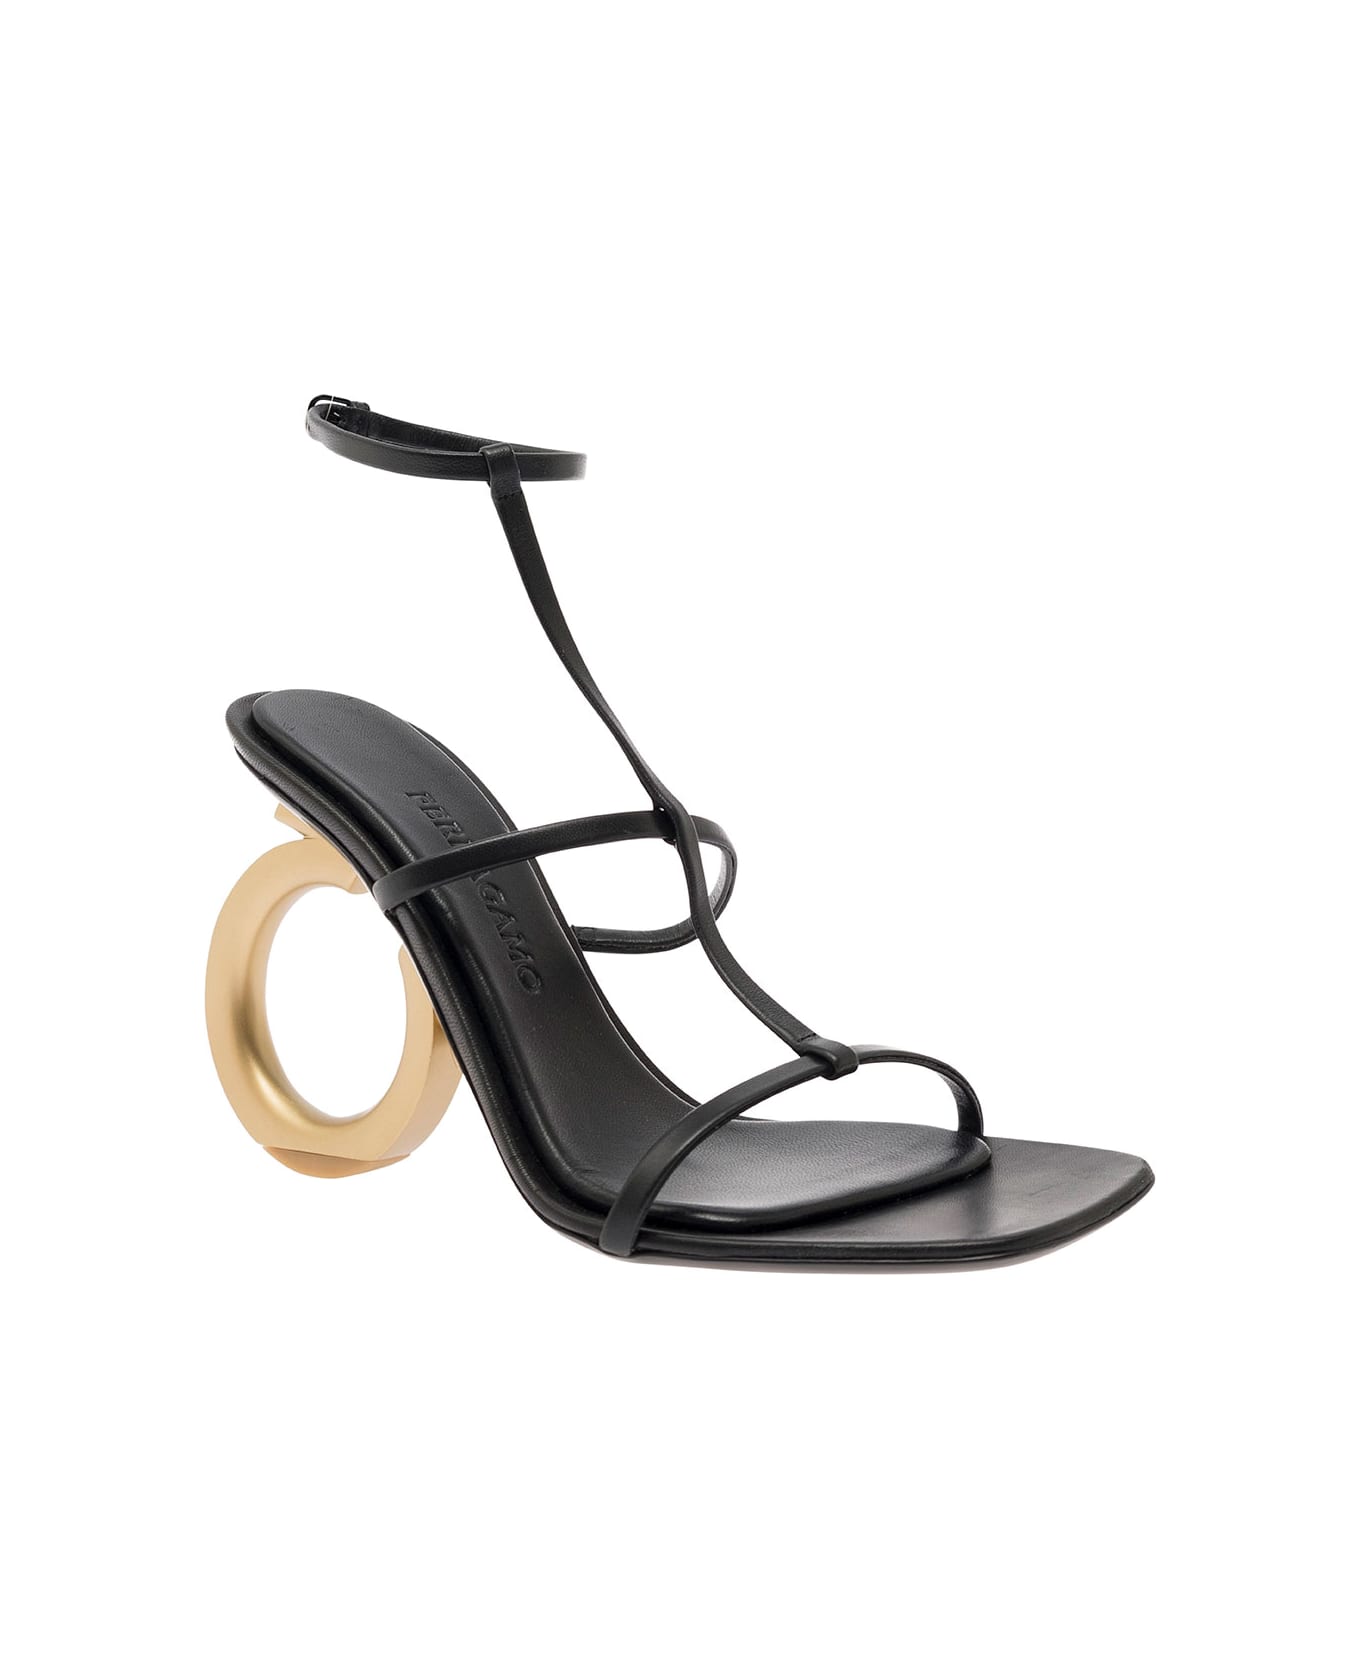 Ferragamo 'elina' Black Sandals With Sculptural Gancini Heel In Leather Woman - Black